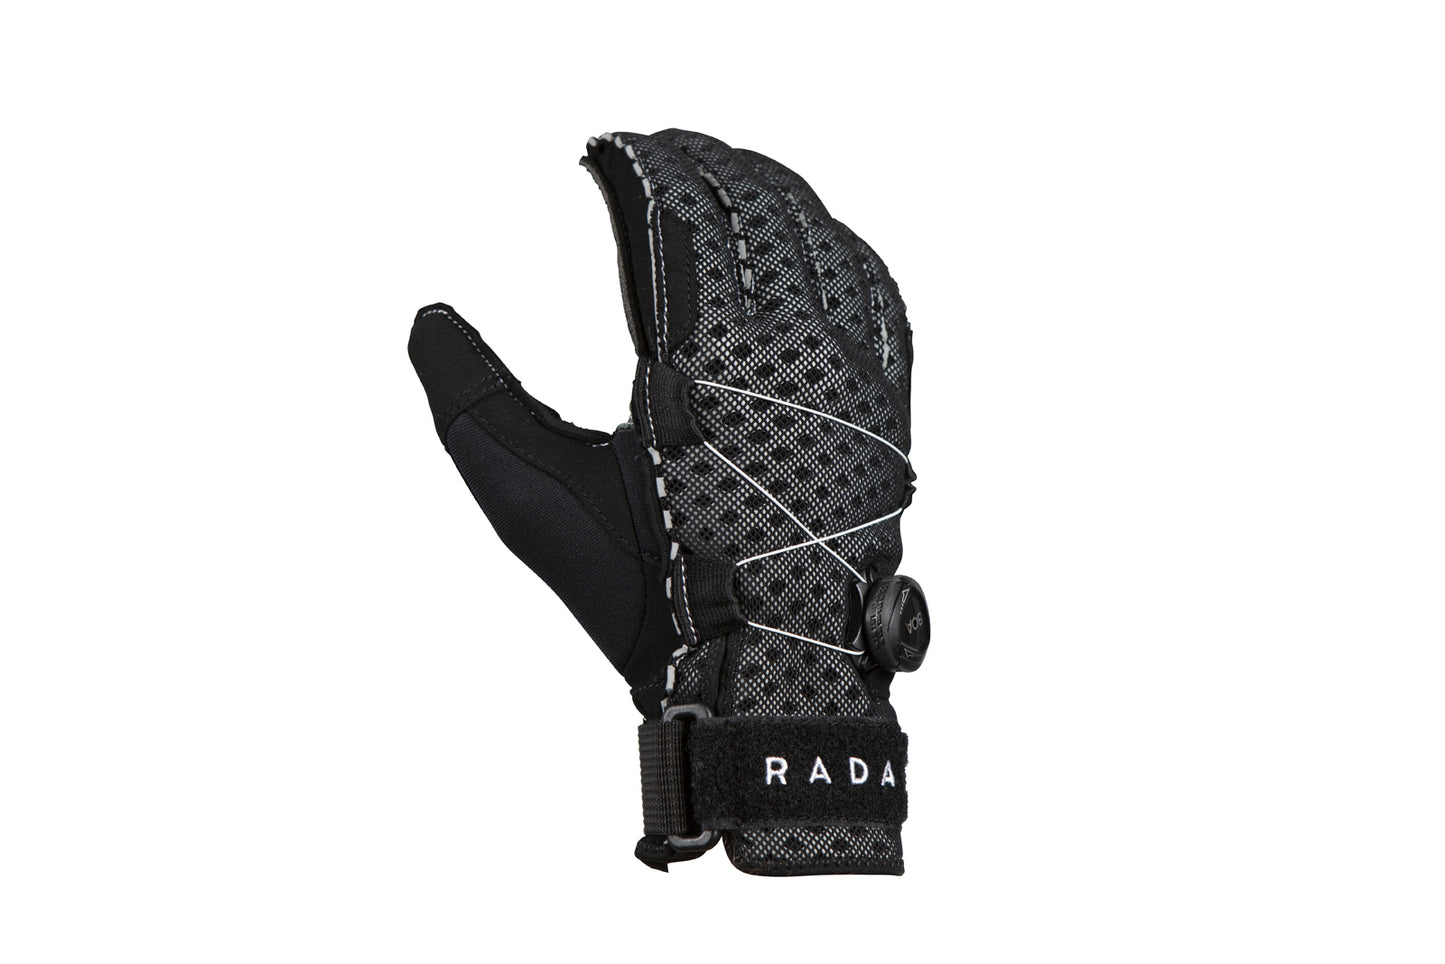 RADAR 2022 Vapor-K Boa Inside-Out Glove